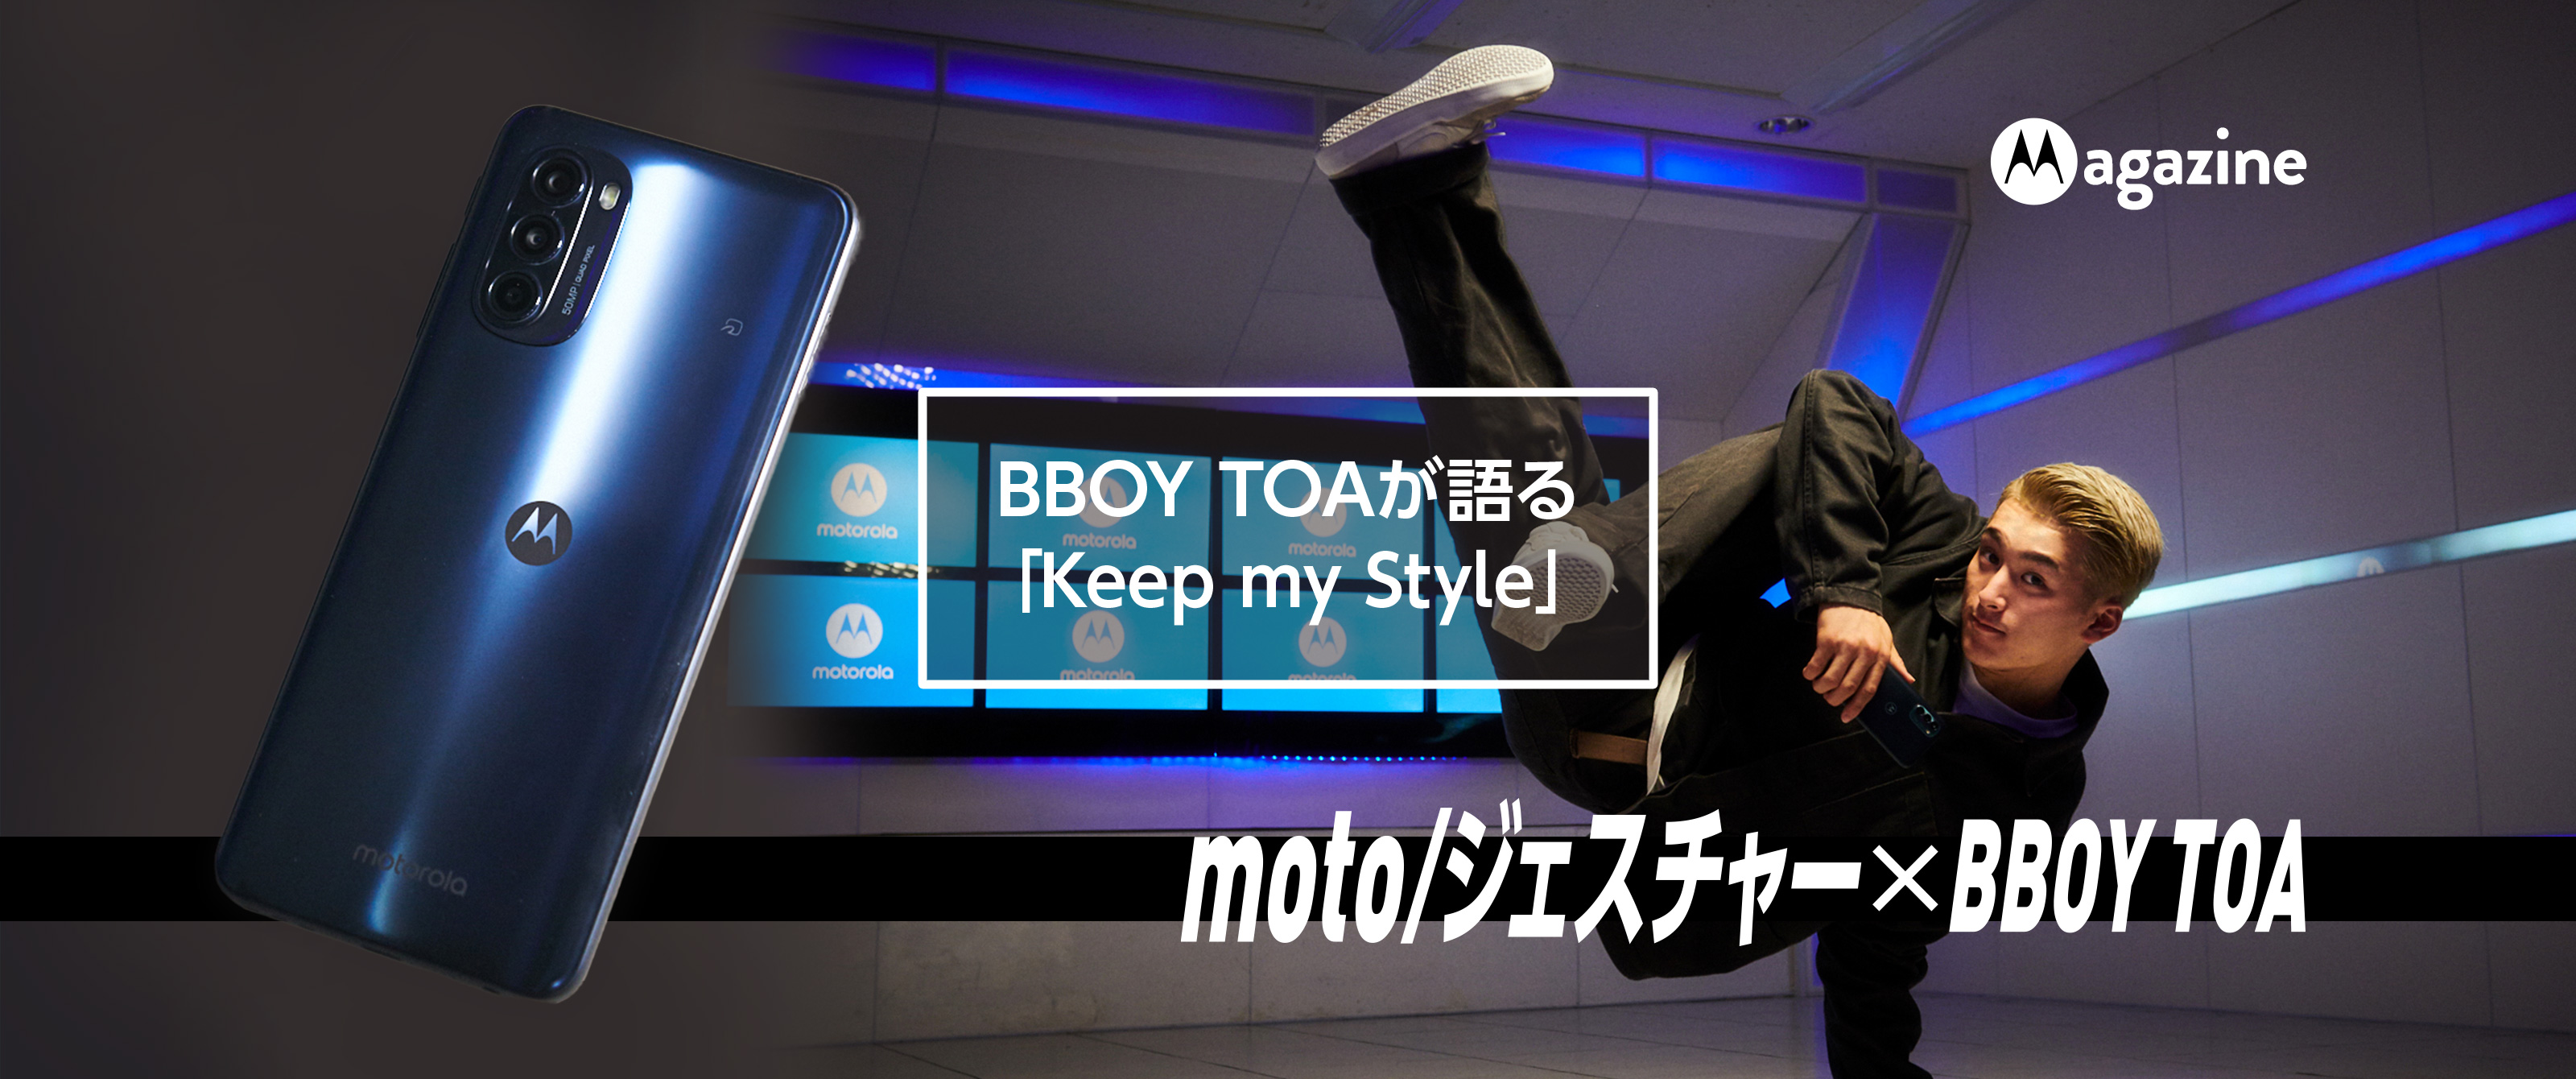 BBOY TOAが語る「Keep may Style」